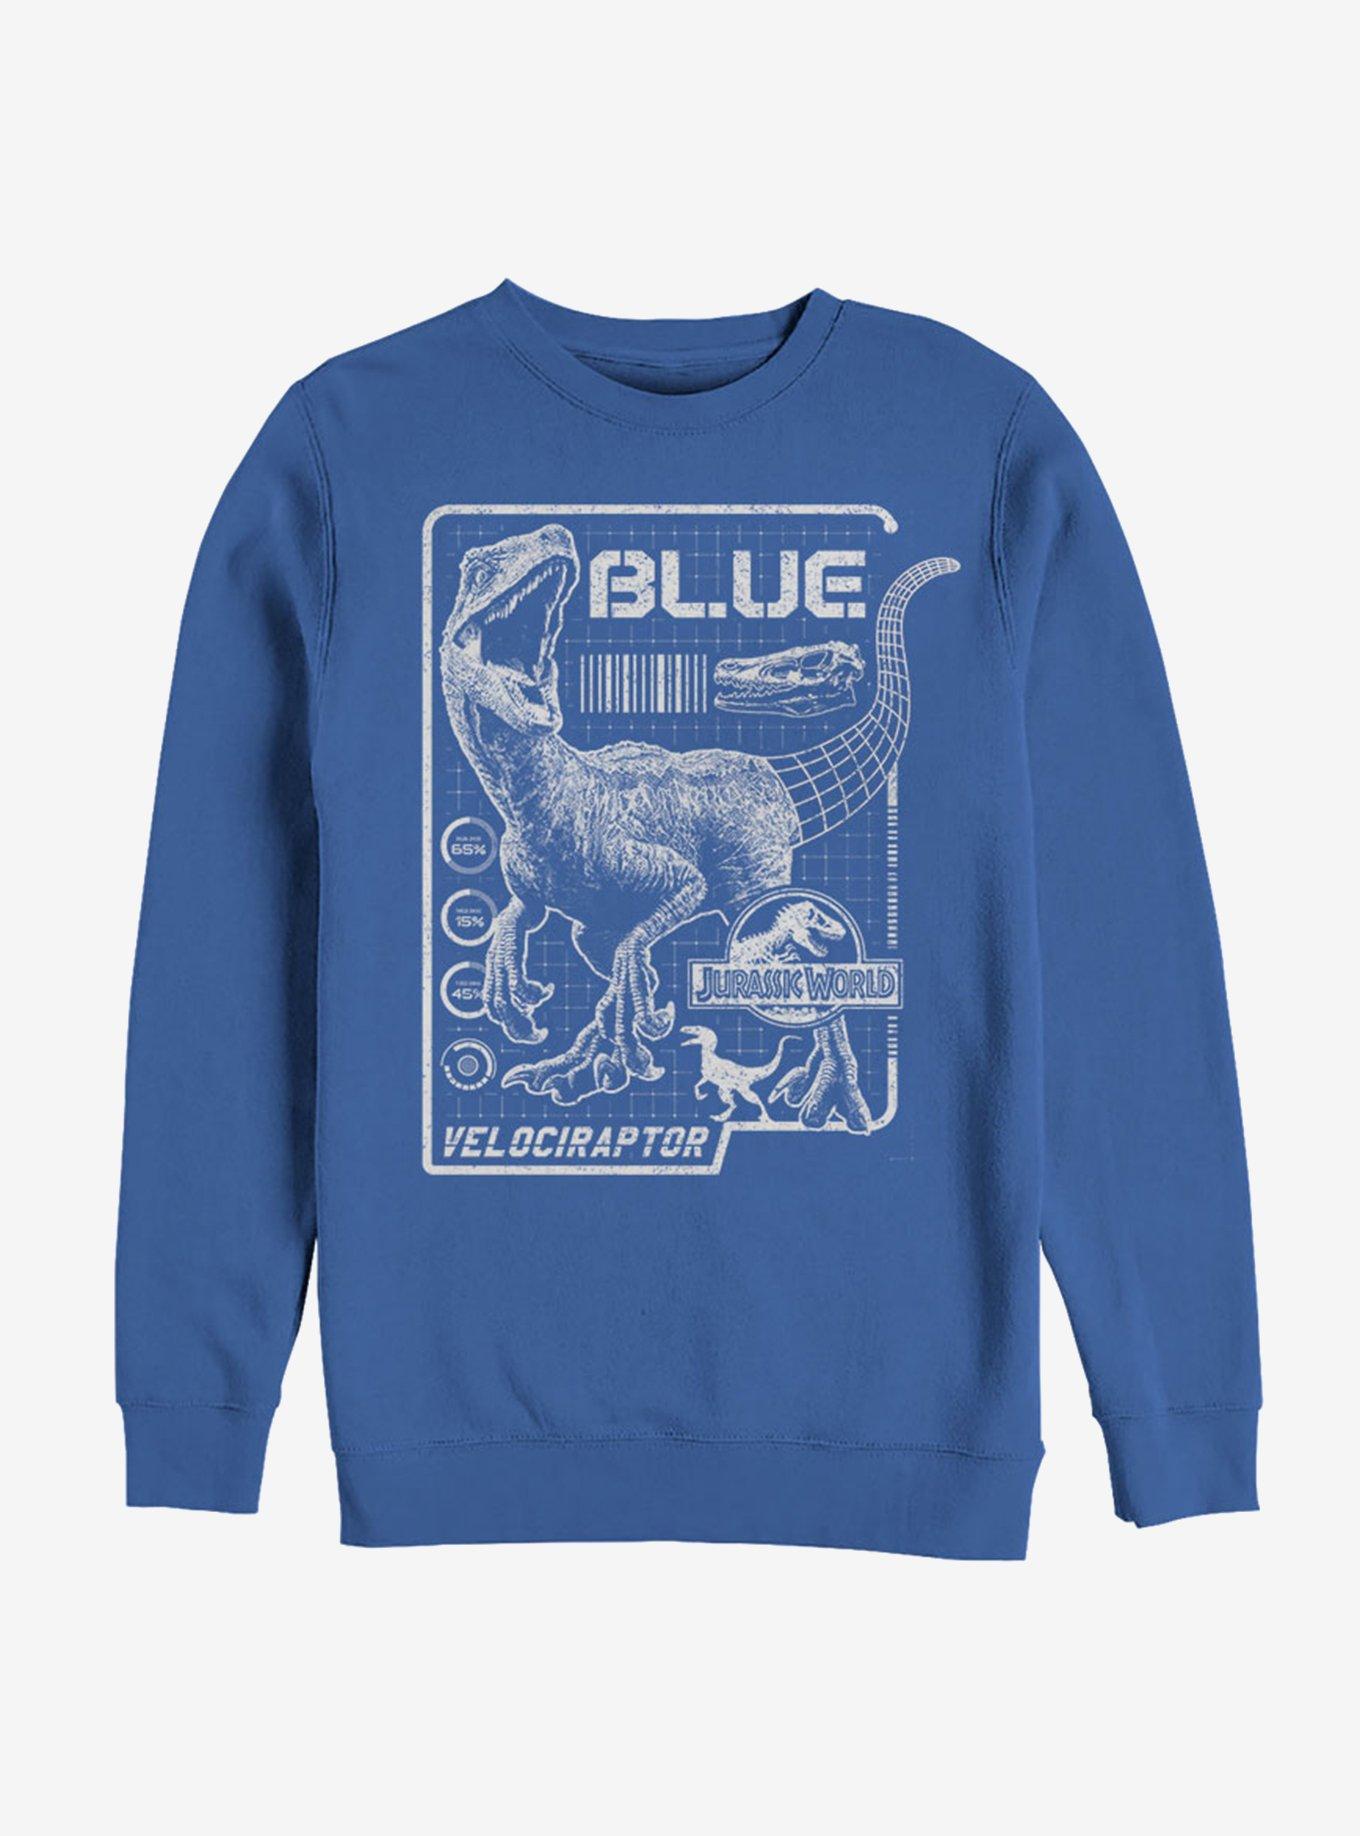 Jurassic Park Raptor Blue Print Sweatshirt, ROYAL, hi-res